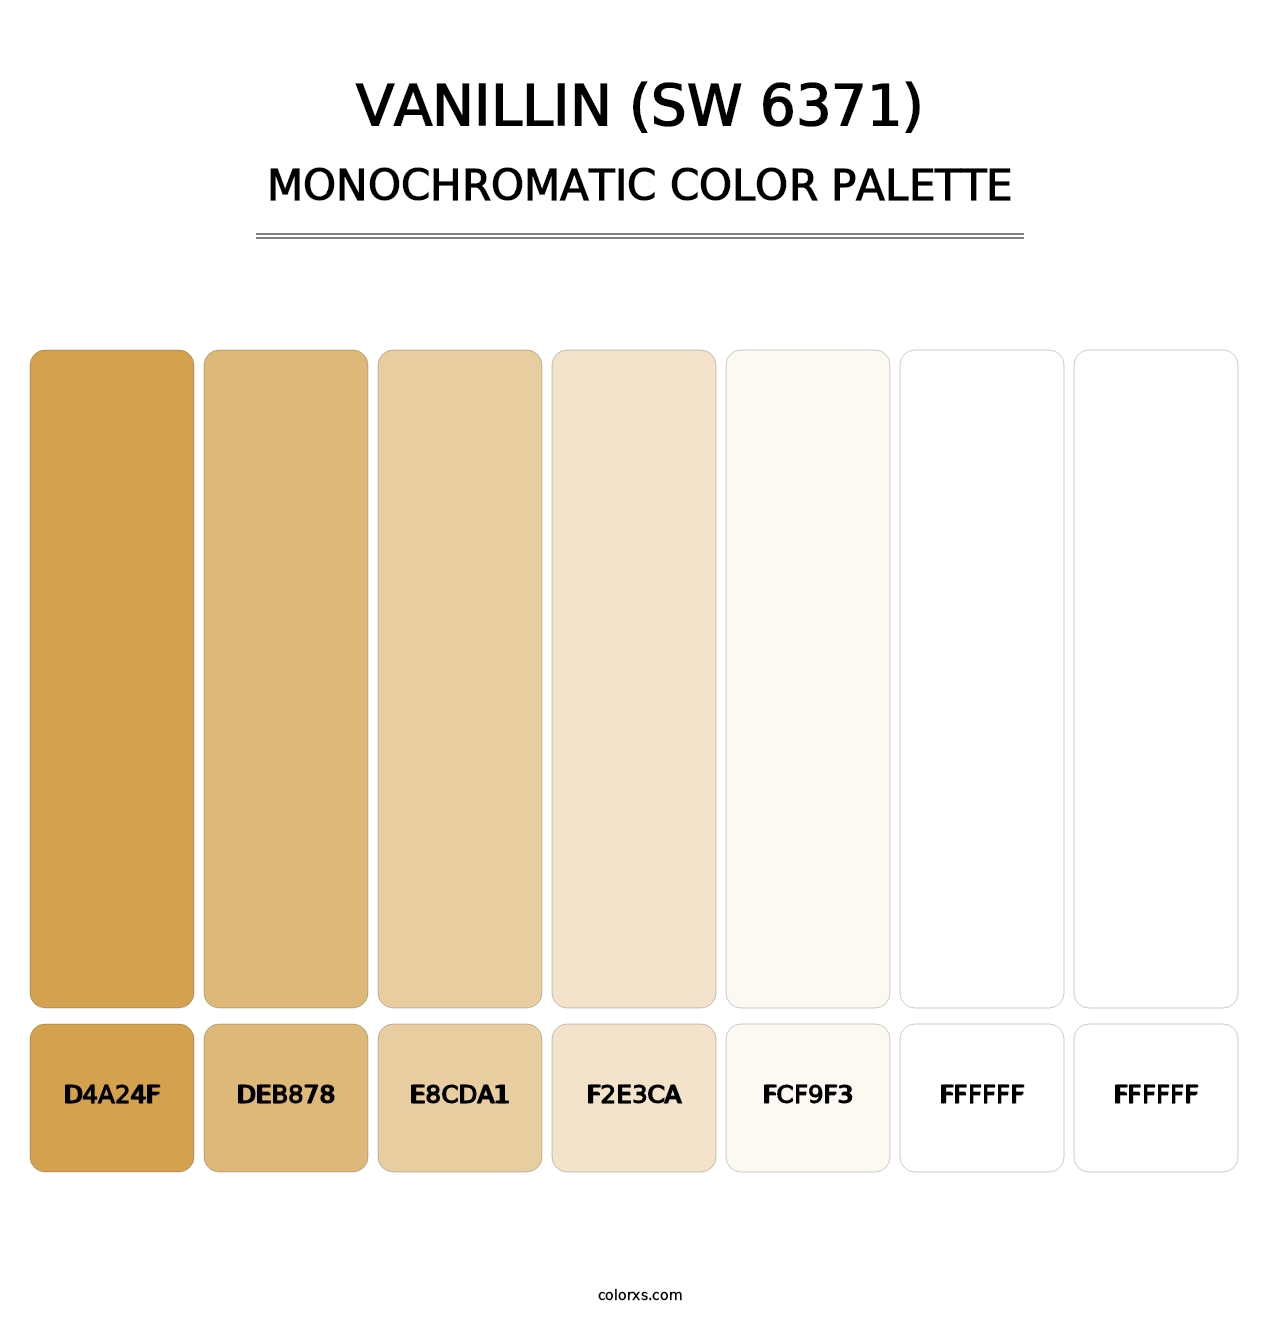 Vanillin (SW 6371) - Monochromatic Color Palette